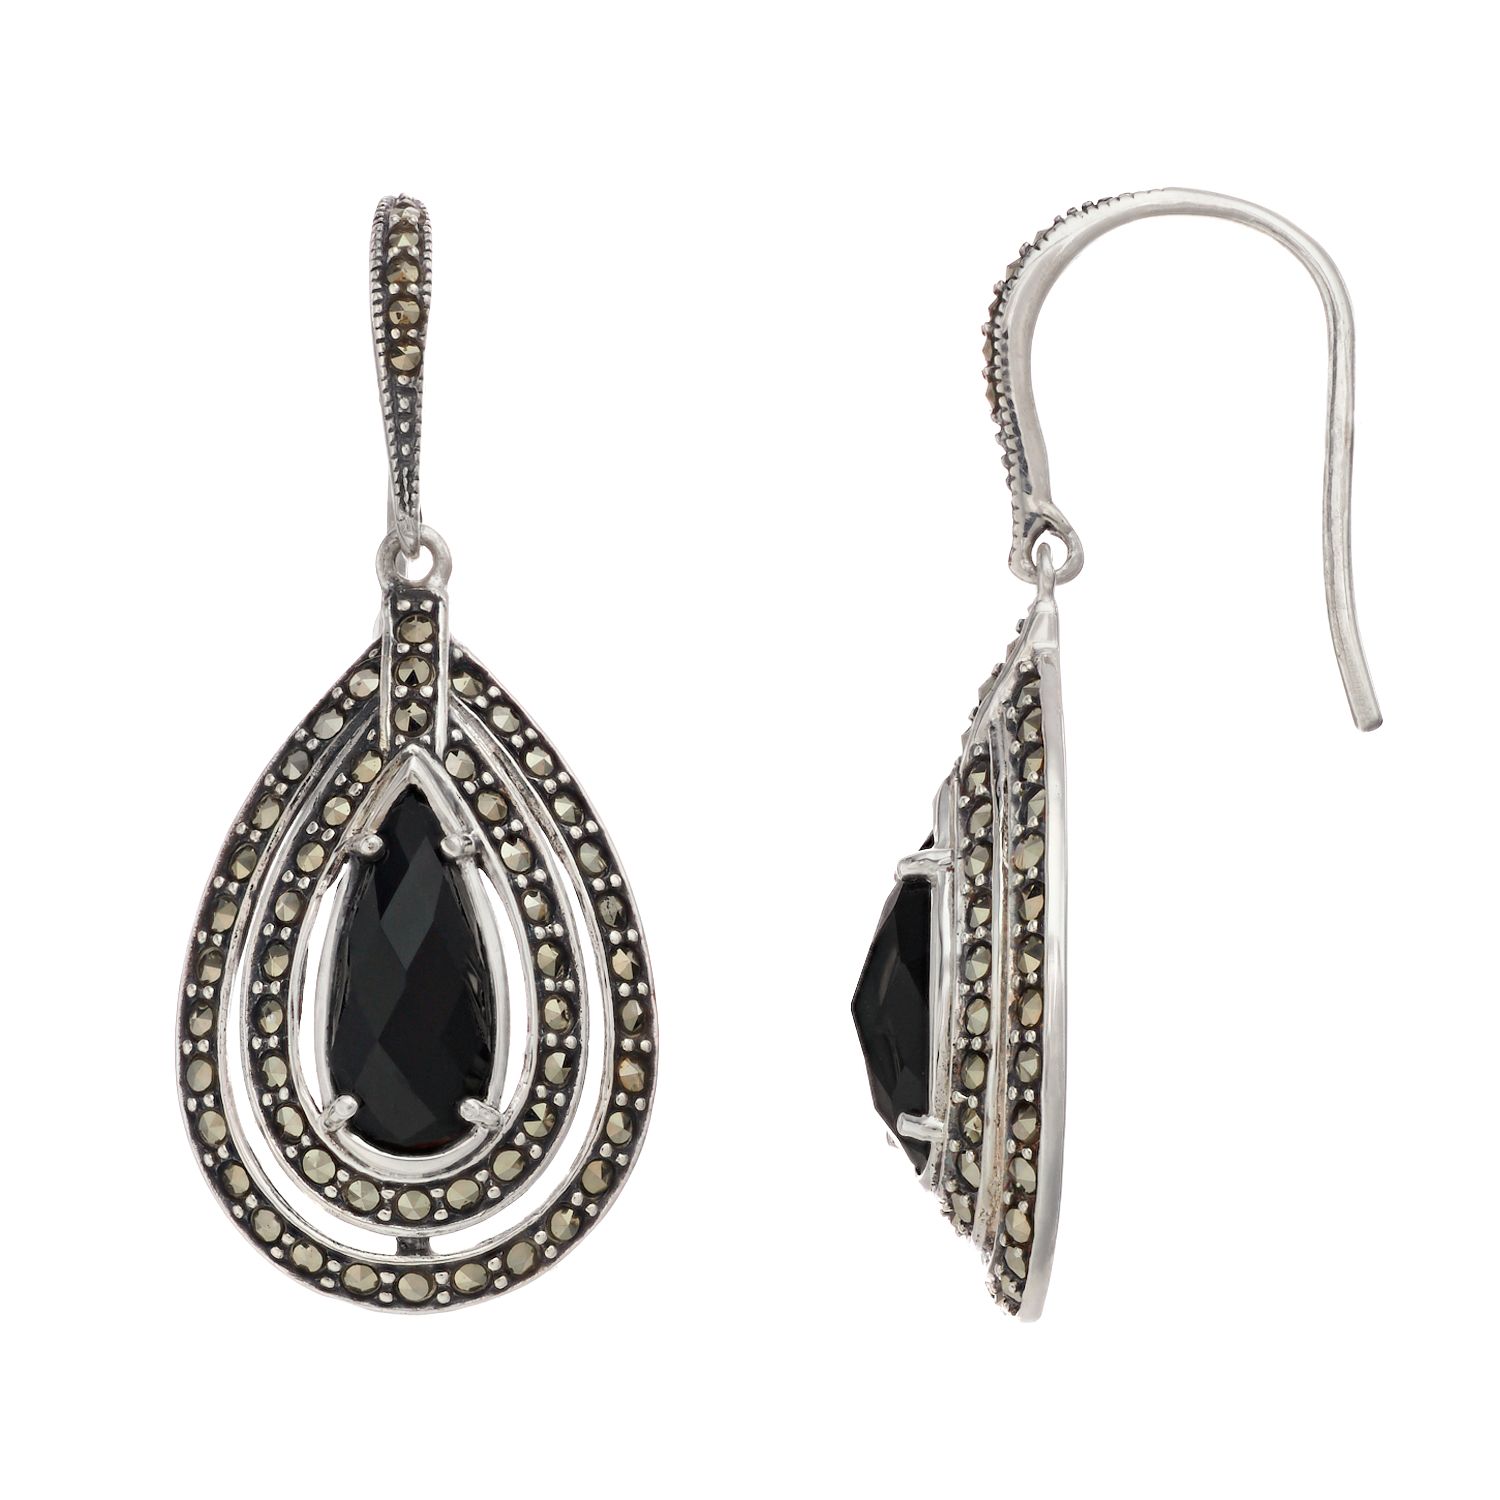 Image for Lavish by TJM Sterling Silver Black Onyx & Marcasite Earrings at Kohl's.